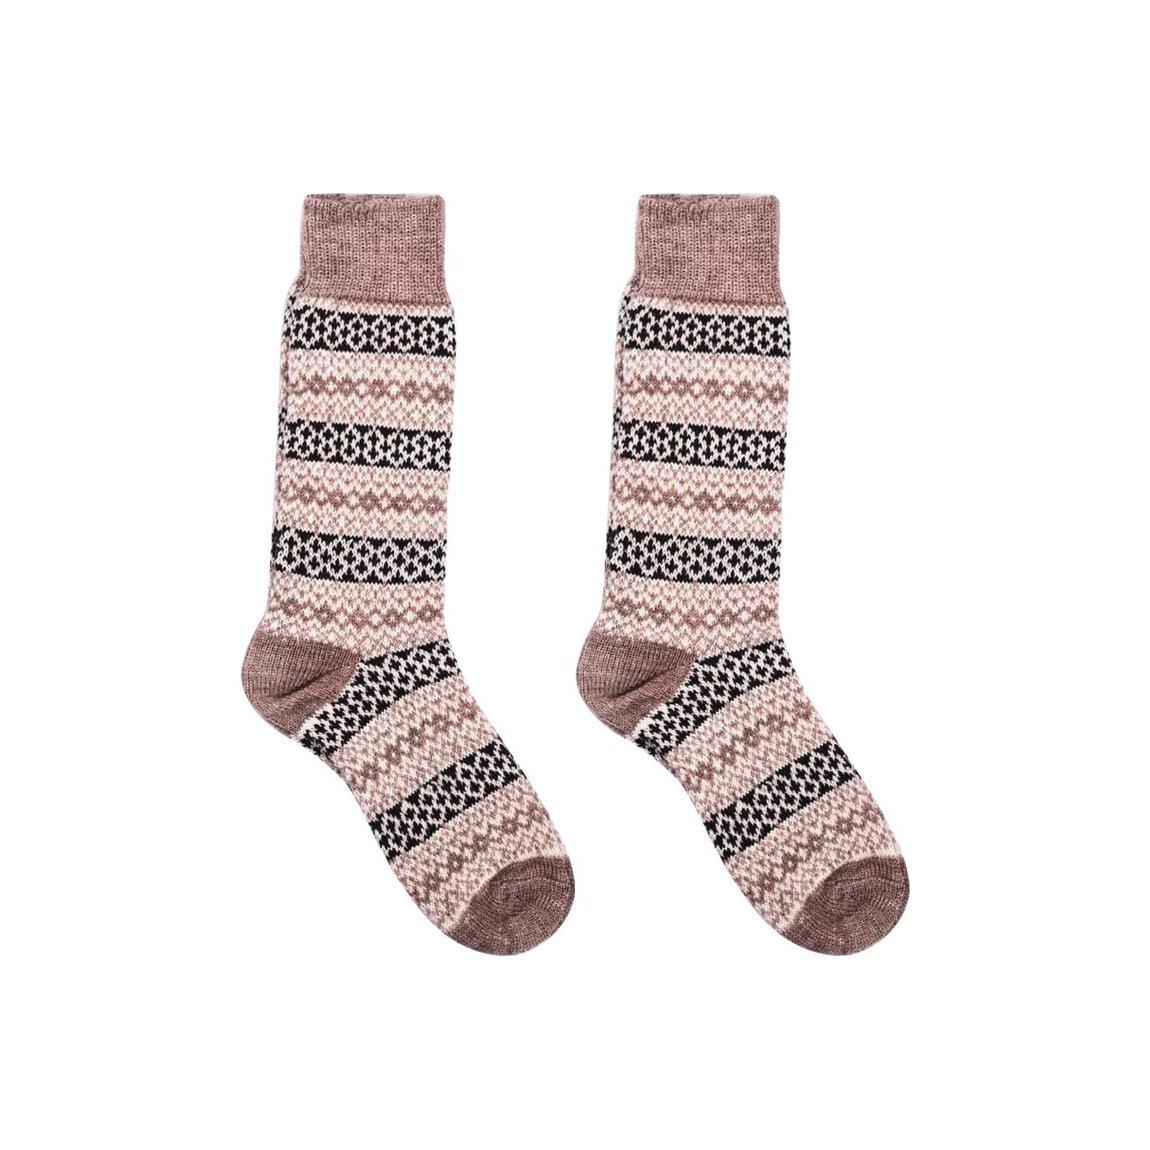 Nordic Socks Merino Wool in PERFORM™ (Torsten - Cinnamon) - Unisex